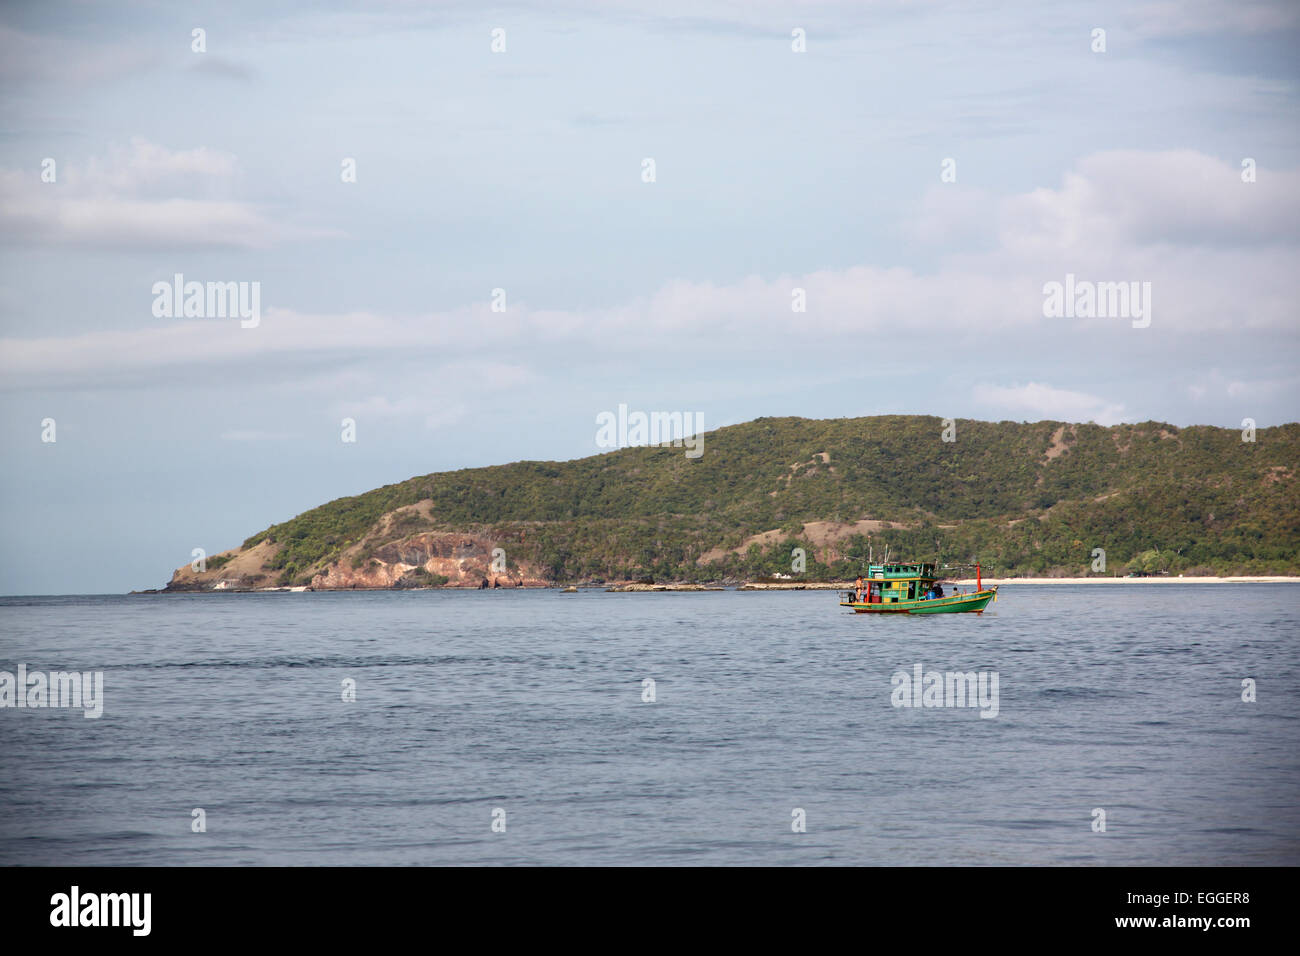 Angelboot/Fischerboot in das Meer und die Insel. Stockfoto